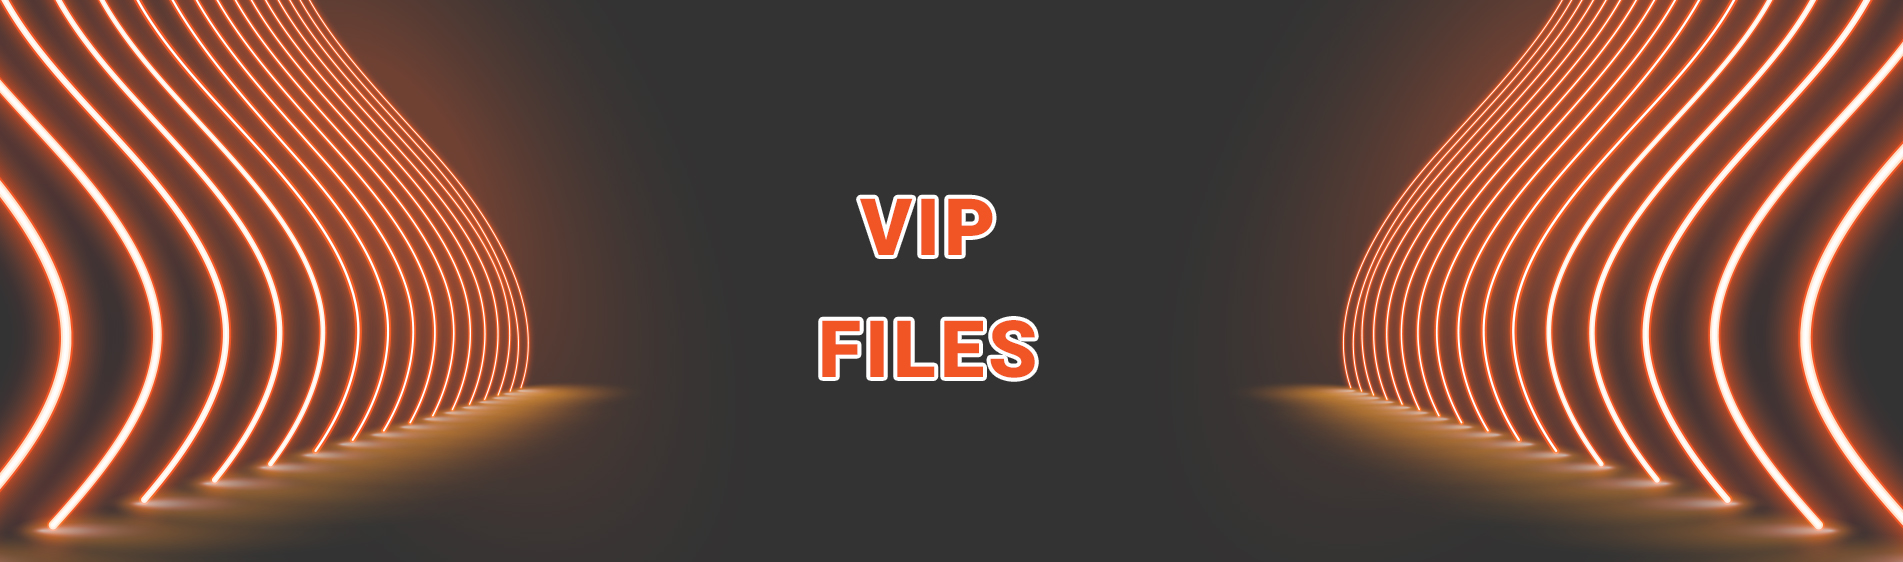 VIP files